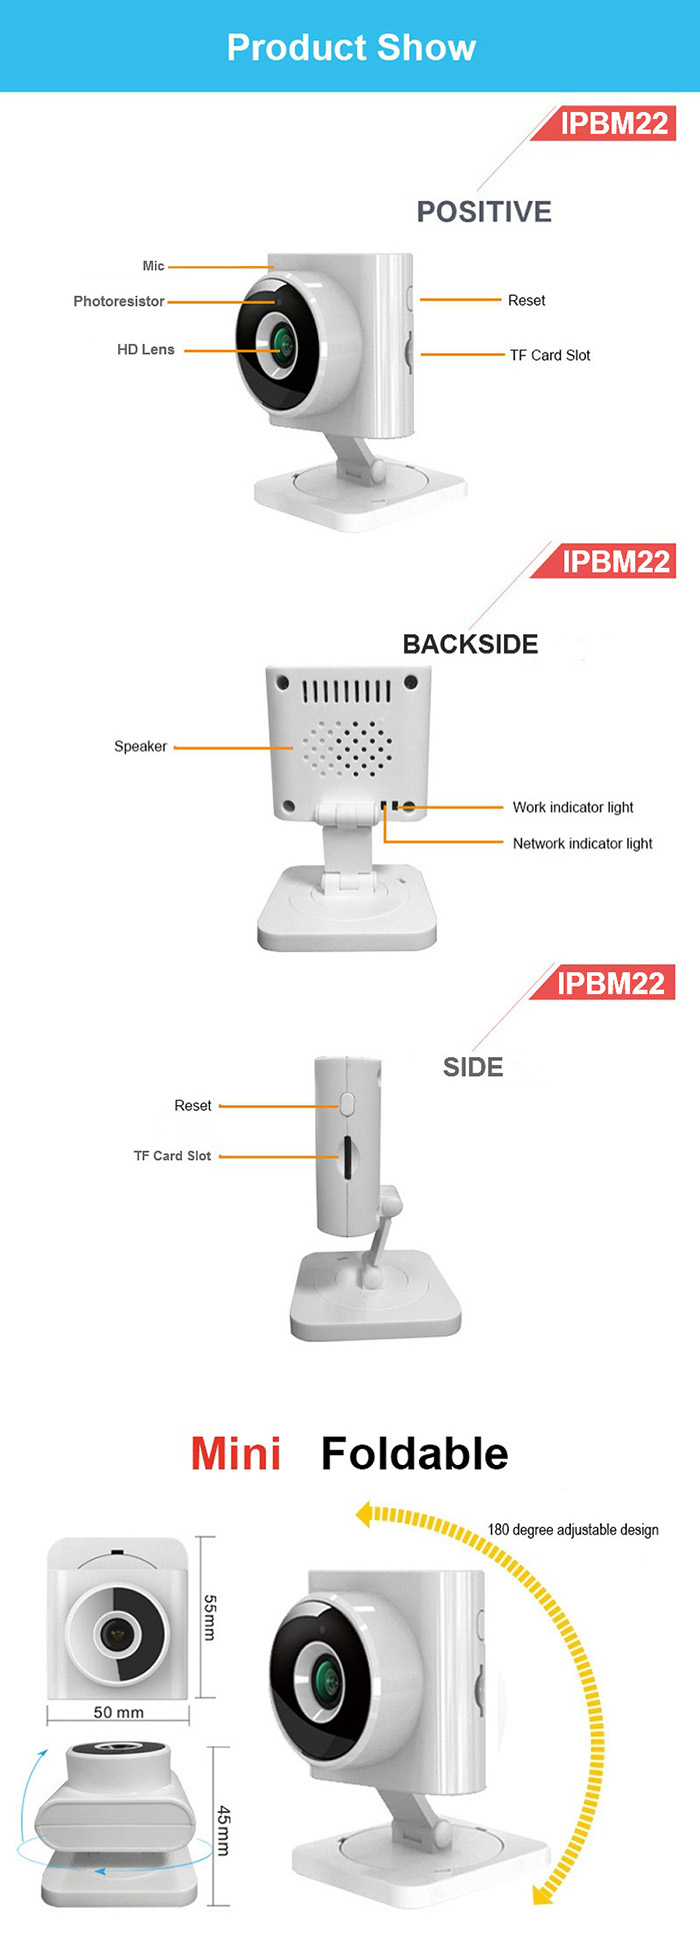 LEKEMI IPBM22 Baby Monitor WiFi IP Camera 720P with Night Vision Two-way Audio Motion Detection